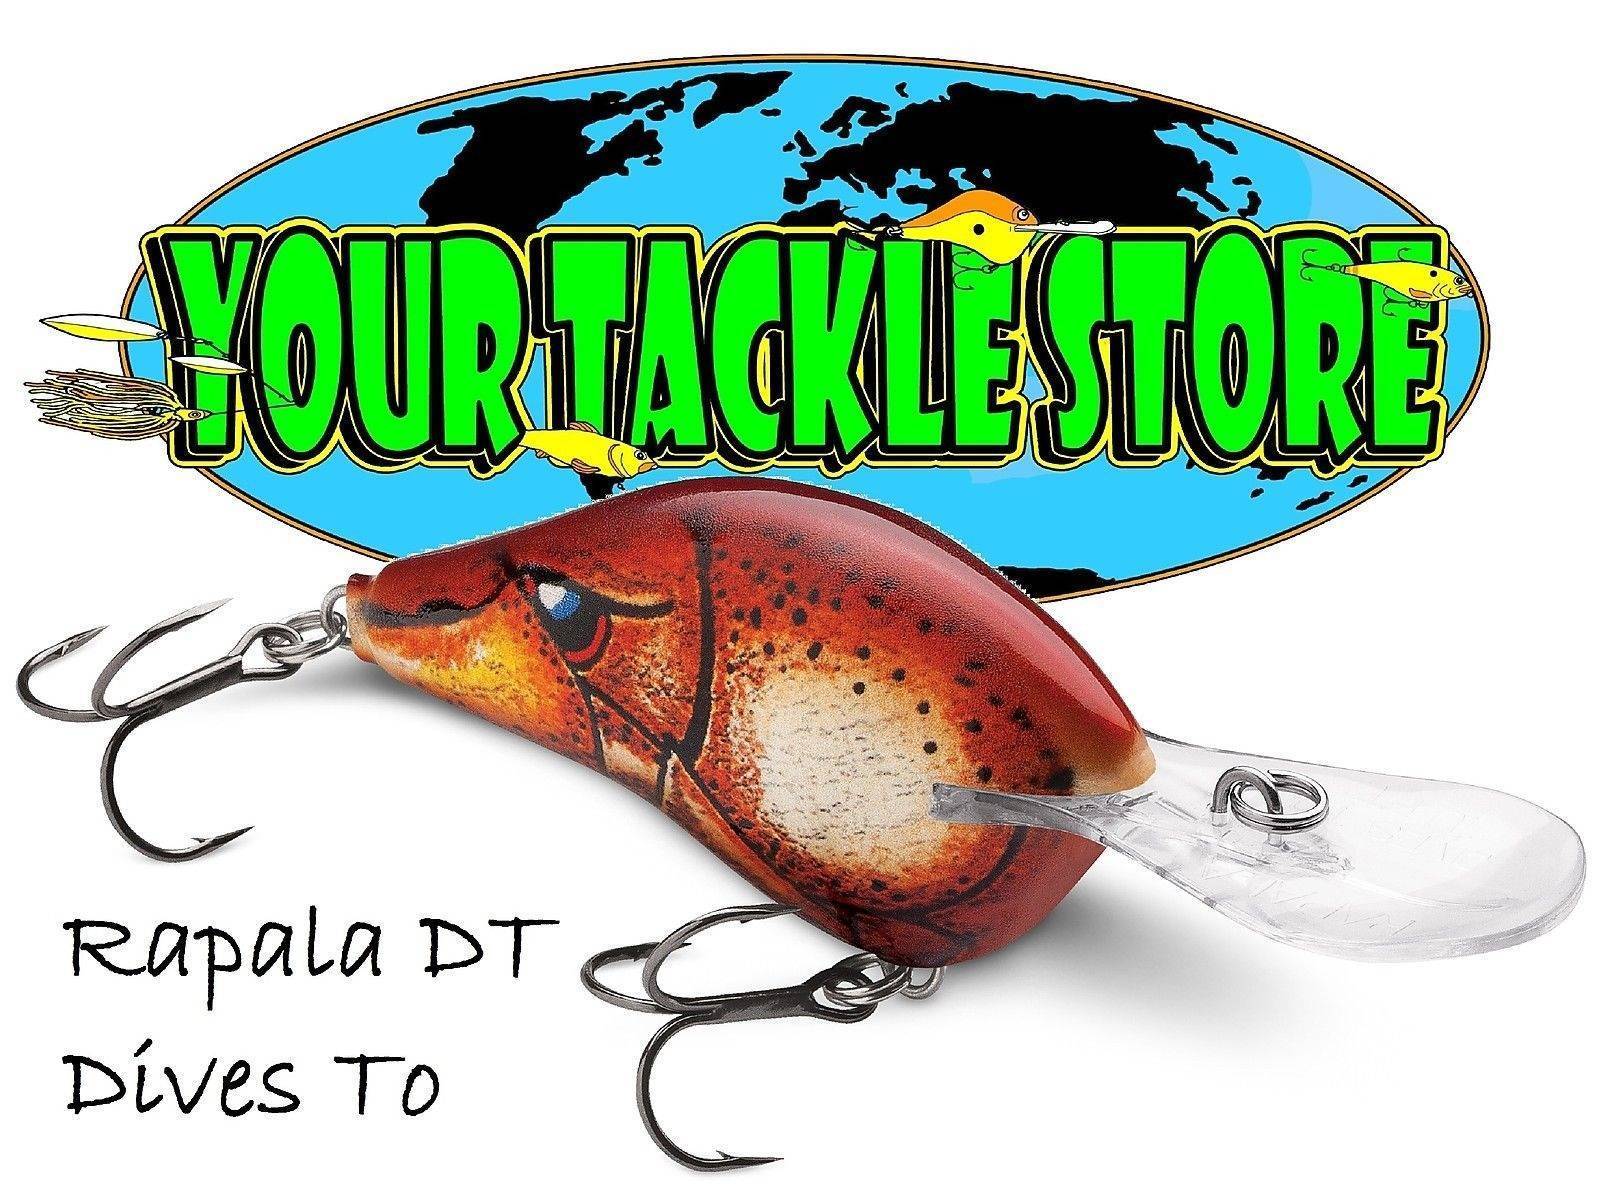 Rapala pro fishing - gamefish - рыбы из игры